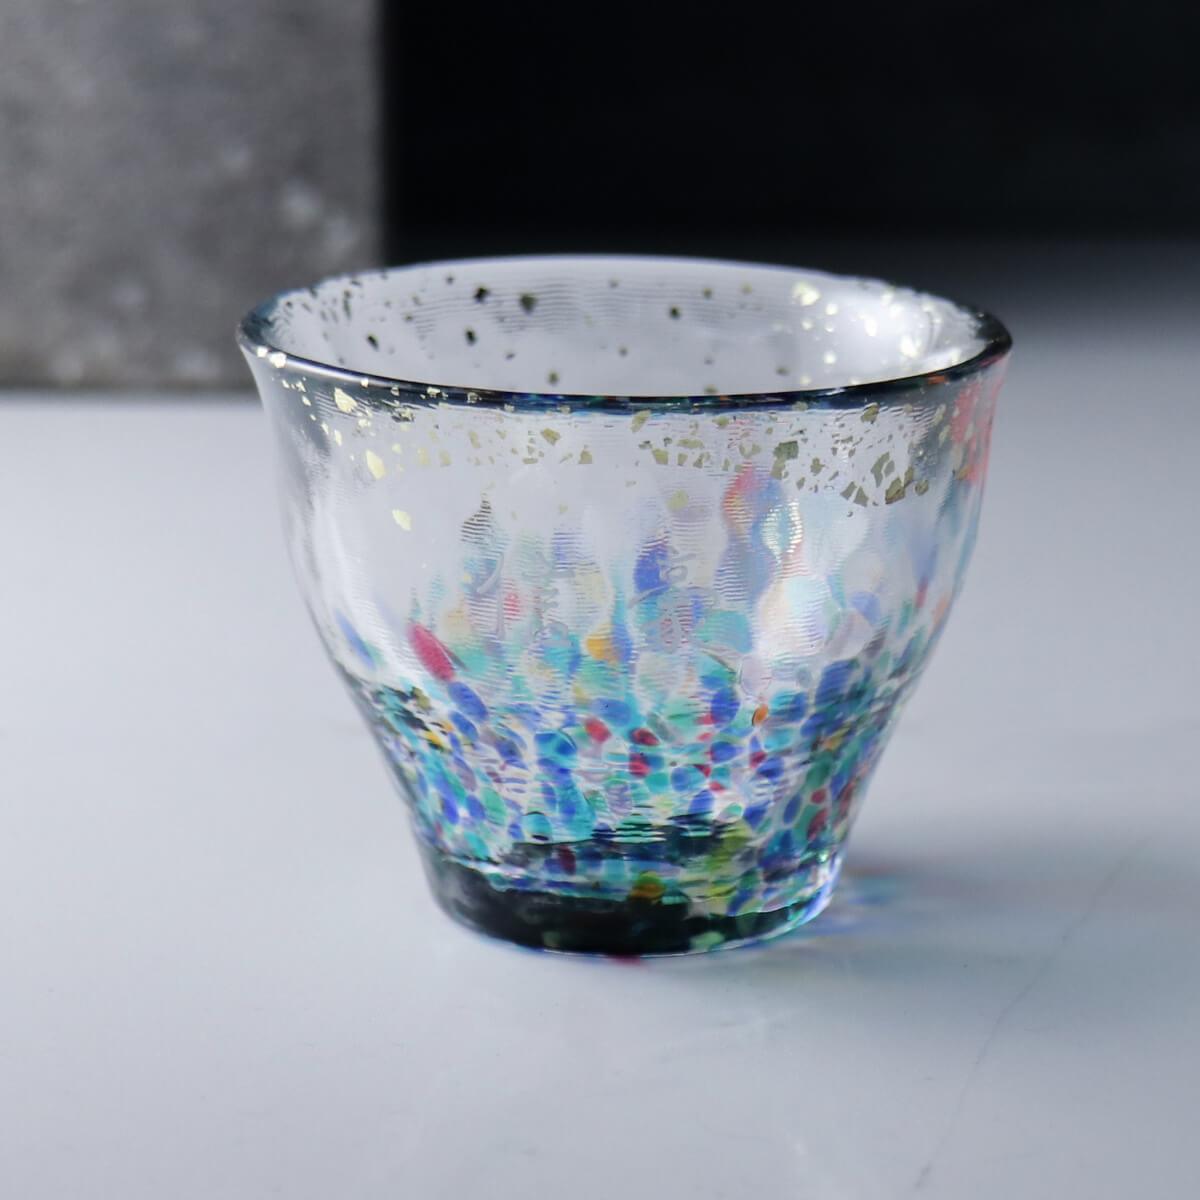 85cc【Aderia金箔清酒杯】藍色 日本津輕手作金彩花火湯吞杯 - MSA玻璃雕刻